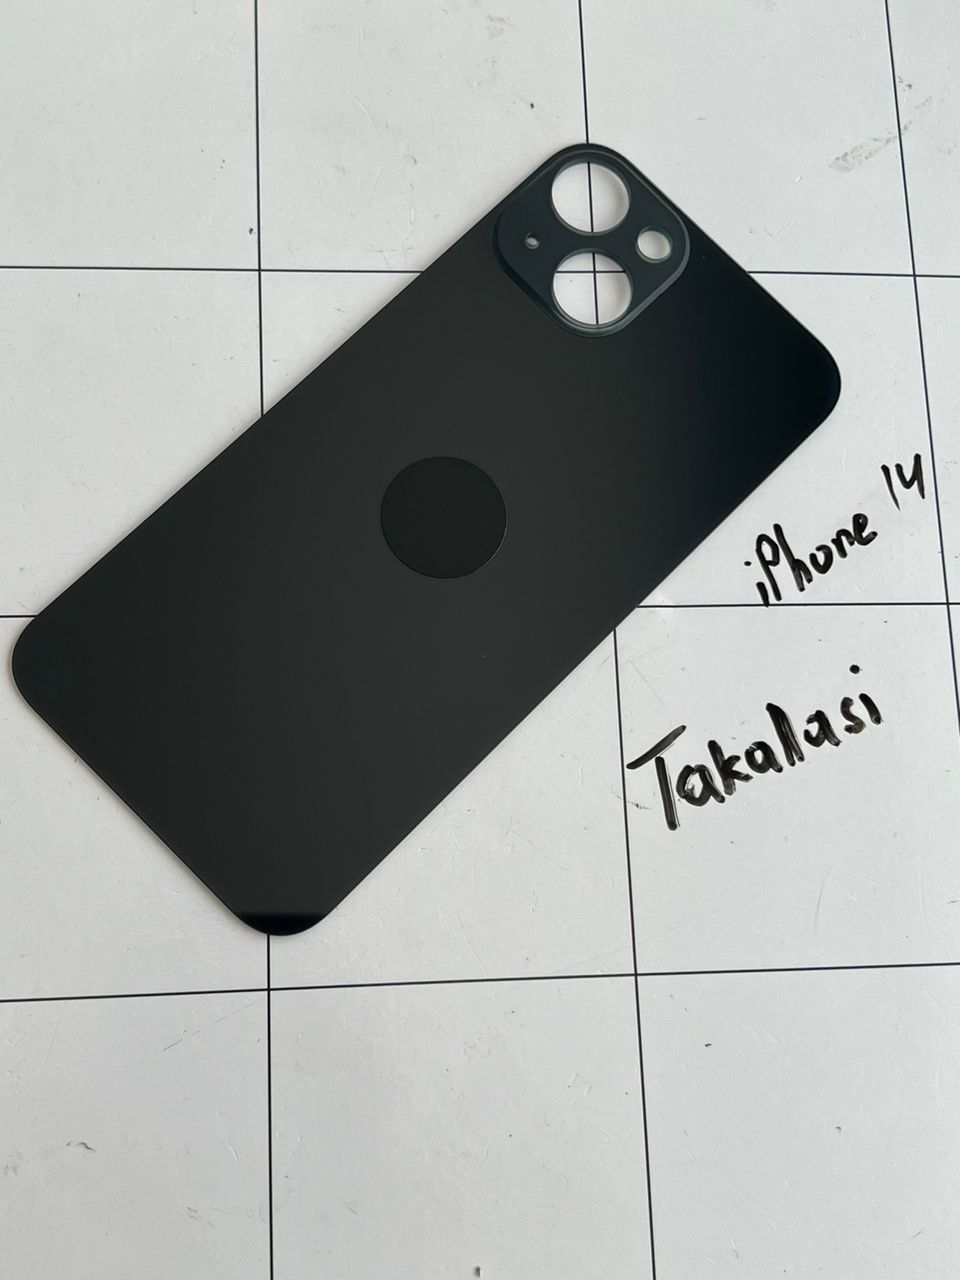 iPhone takalasi (back glass)